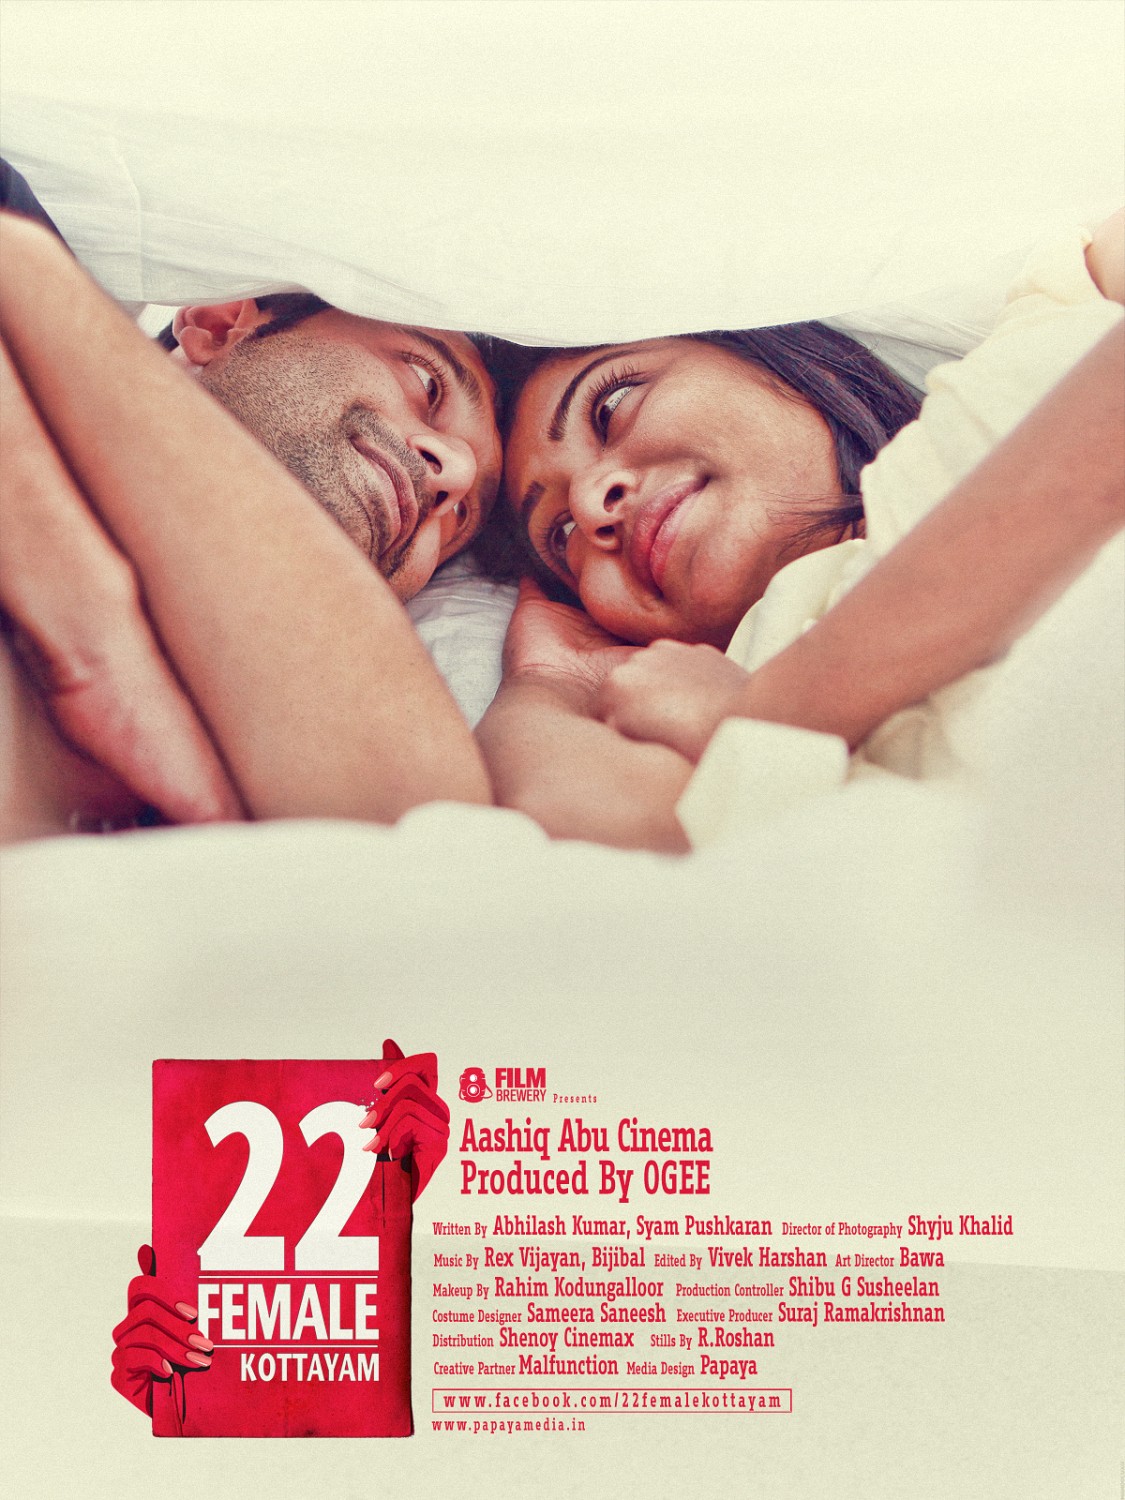 Extra Large Movie Poster Image for 22 Female Kottayam (#14 of 28)